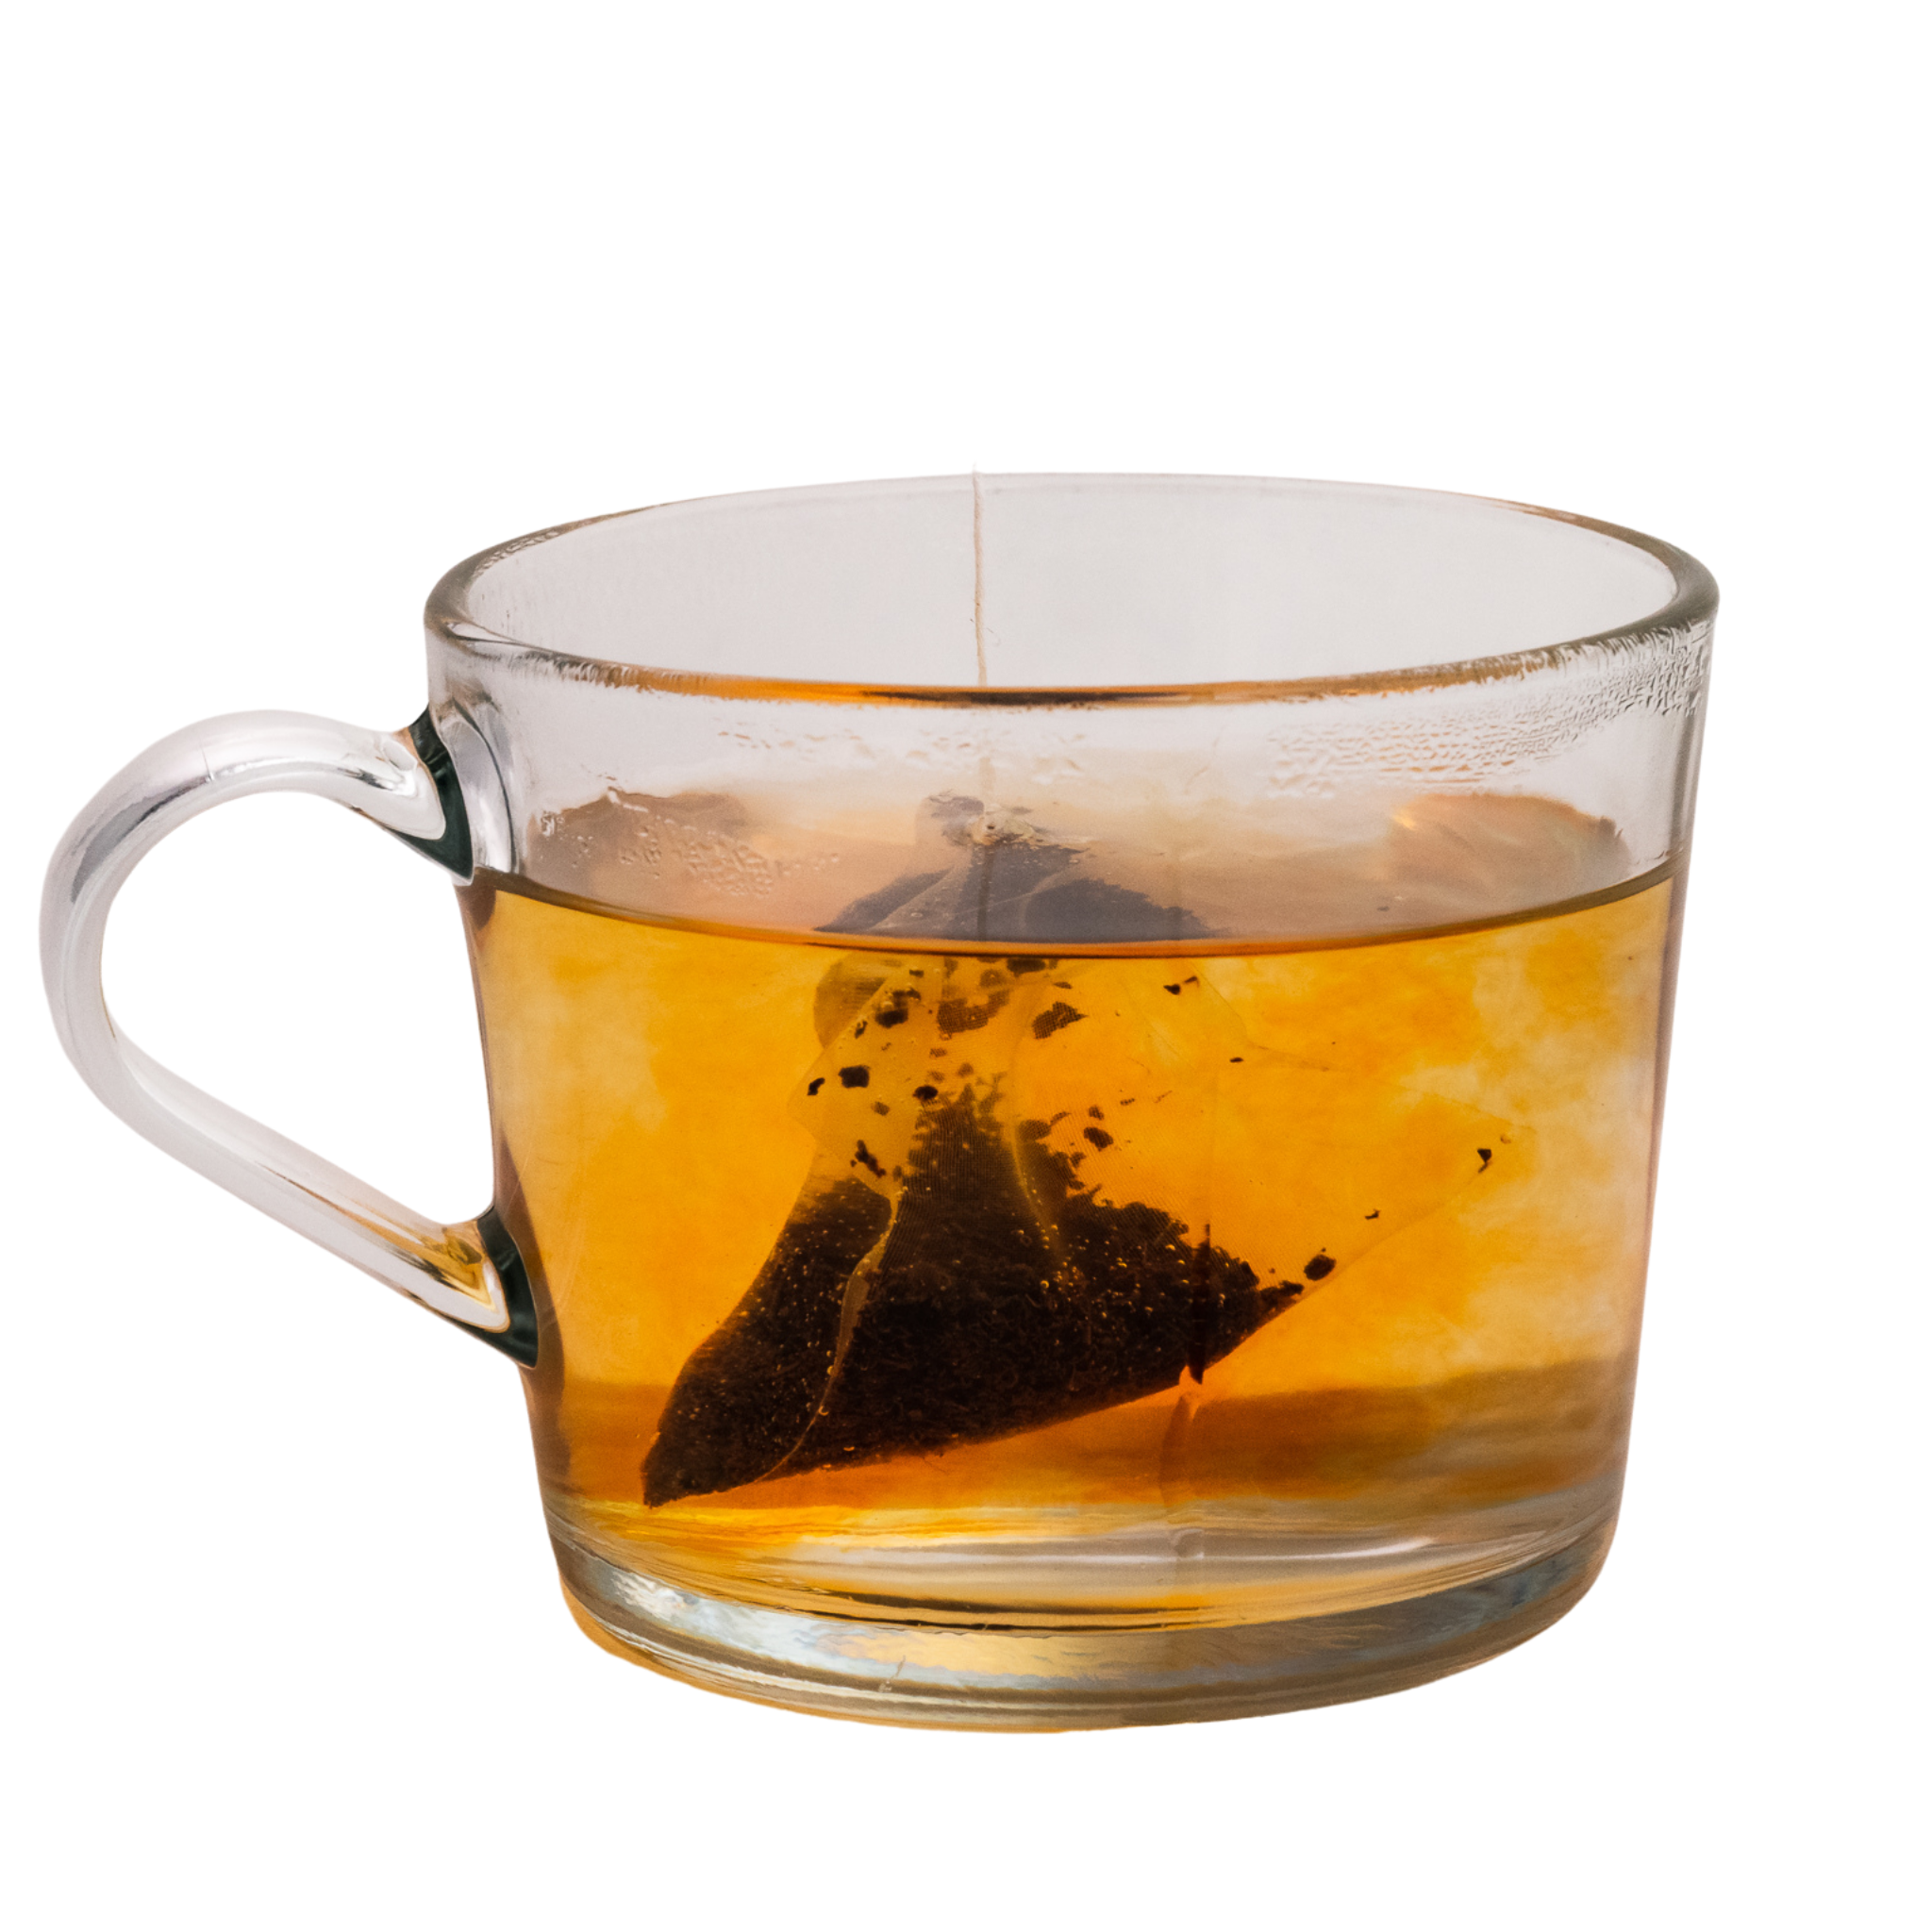 TEA MATE Loose Leaf Tea Bagger Infusing Tea In Clear Tea Cup Of TEA MATE Organic Earl Of House Grey Earl Grey Tea In Premium Biodegradable Tea Bags